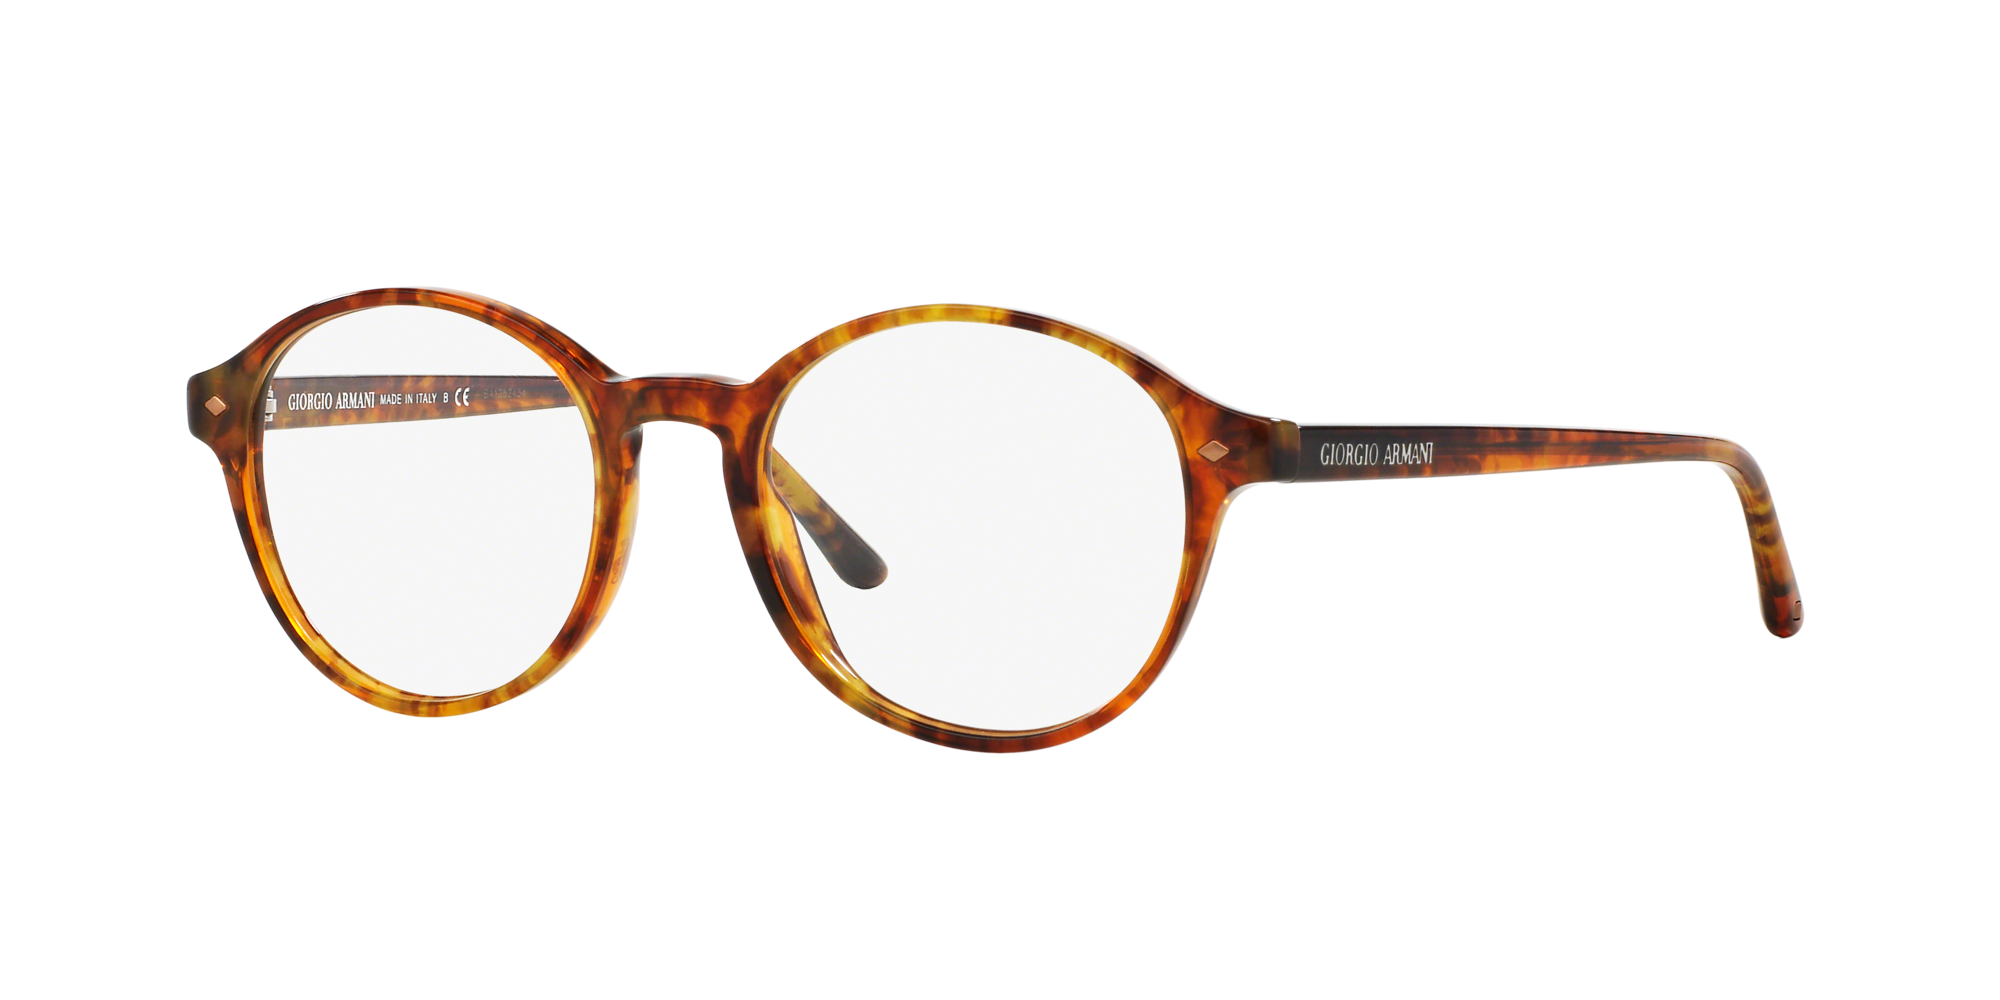 giorgio armani glasses frames